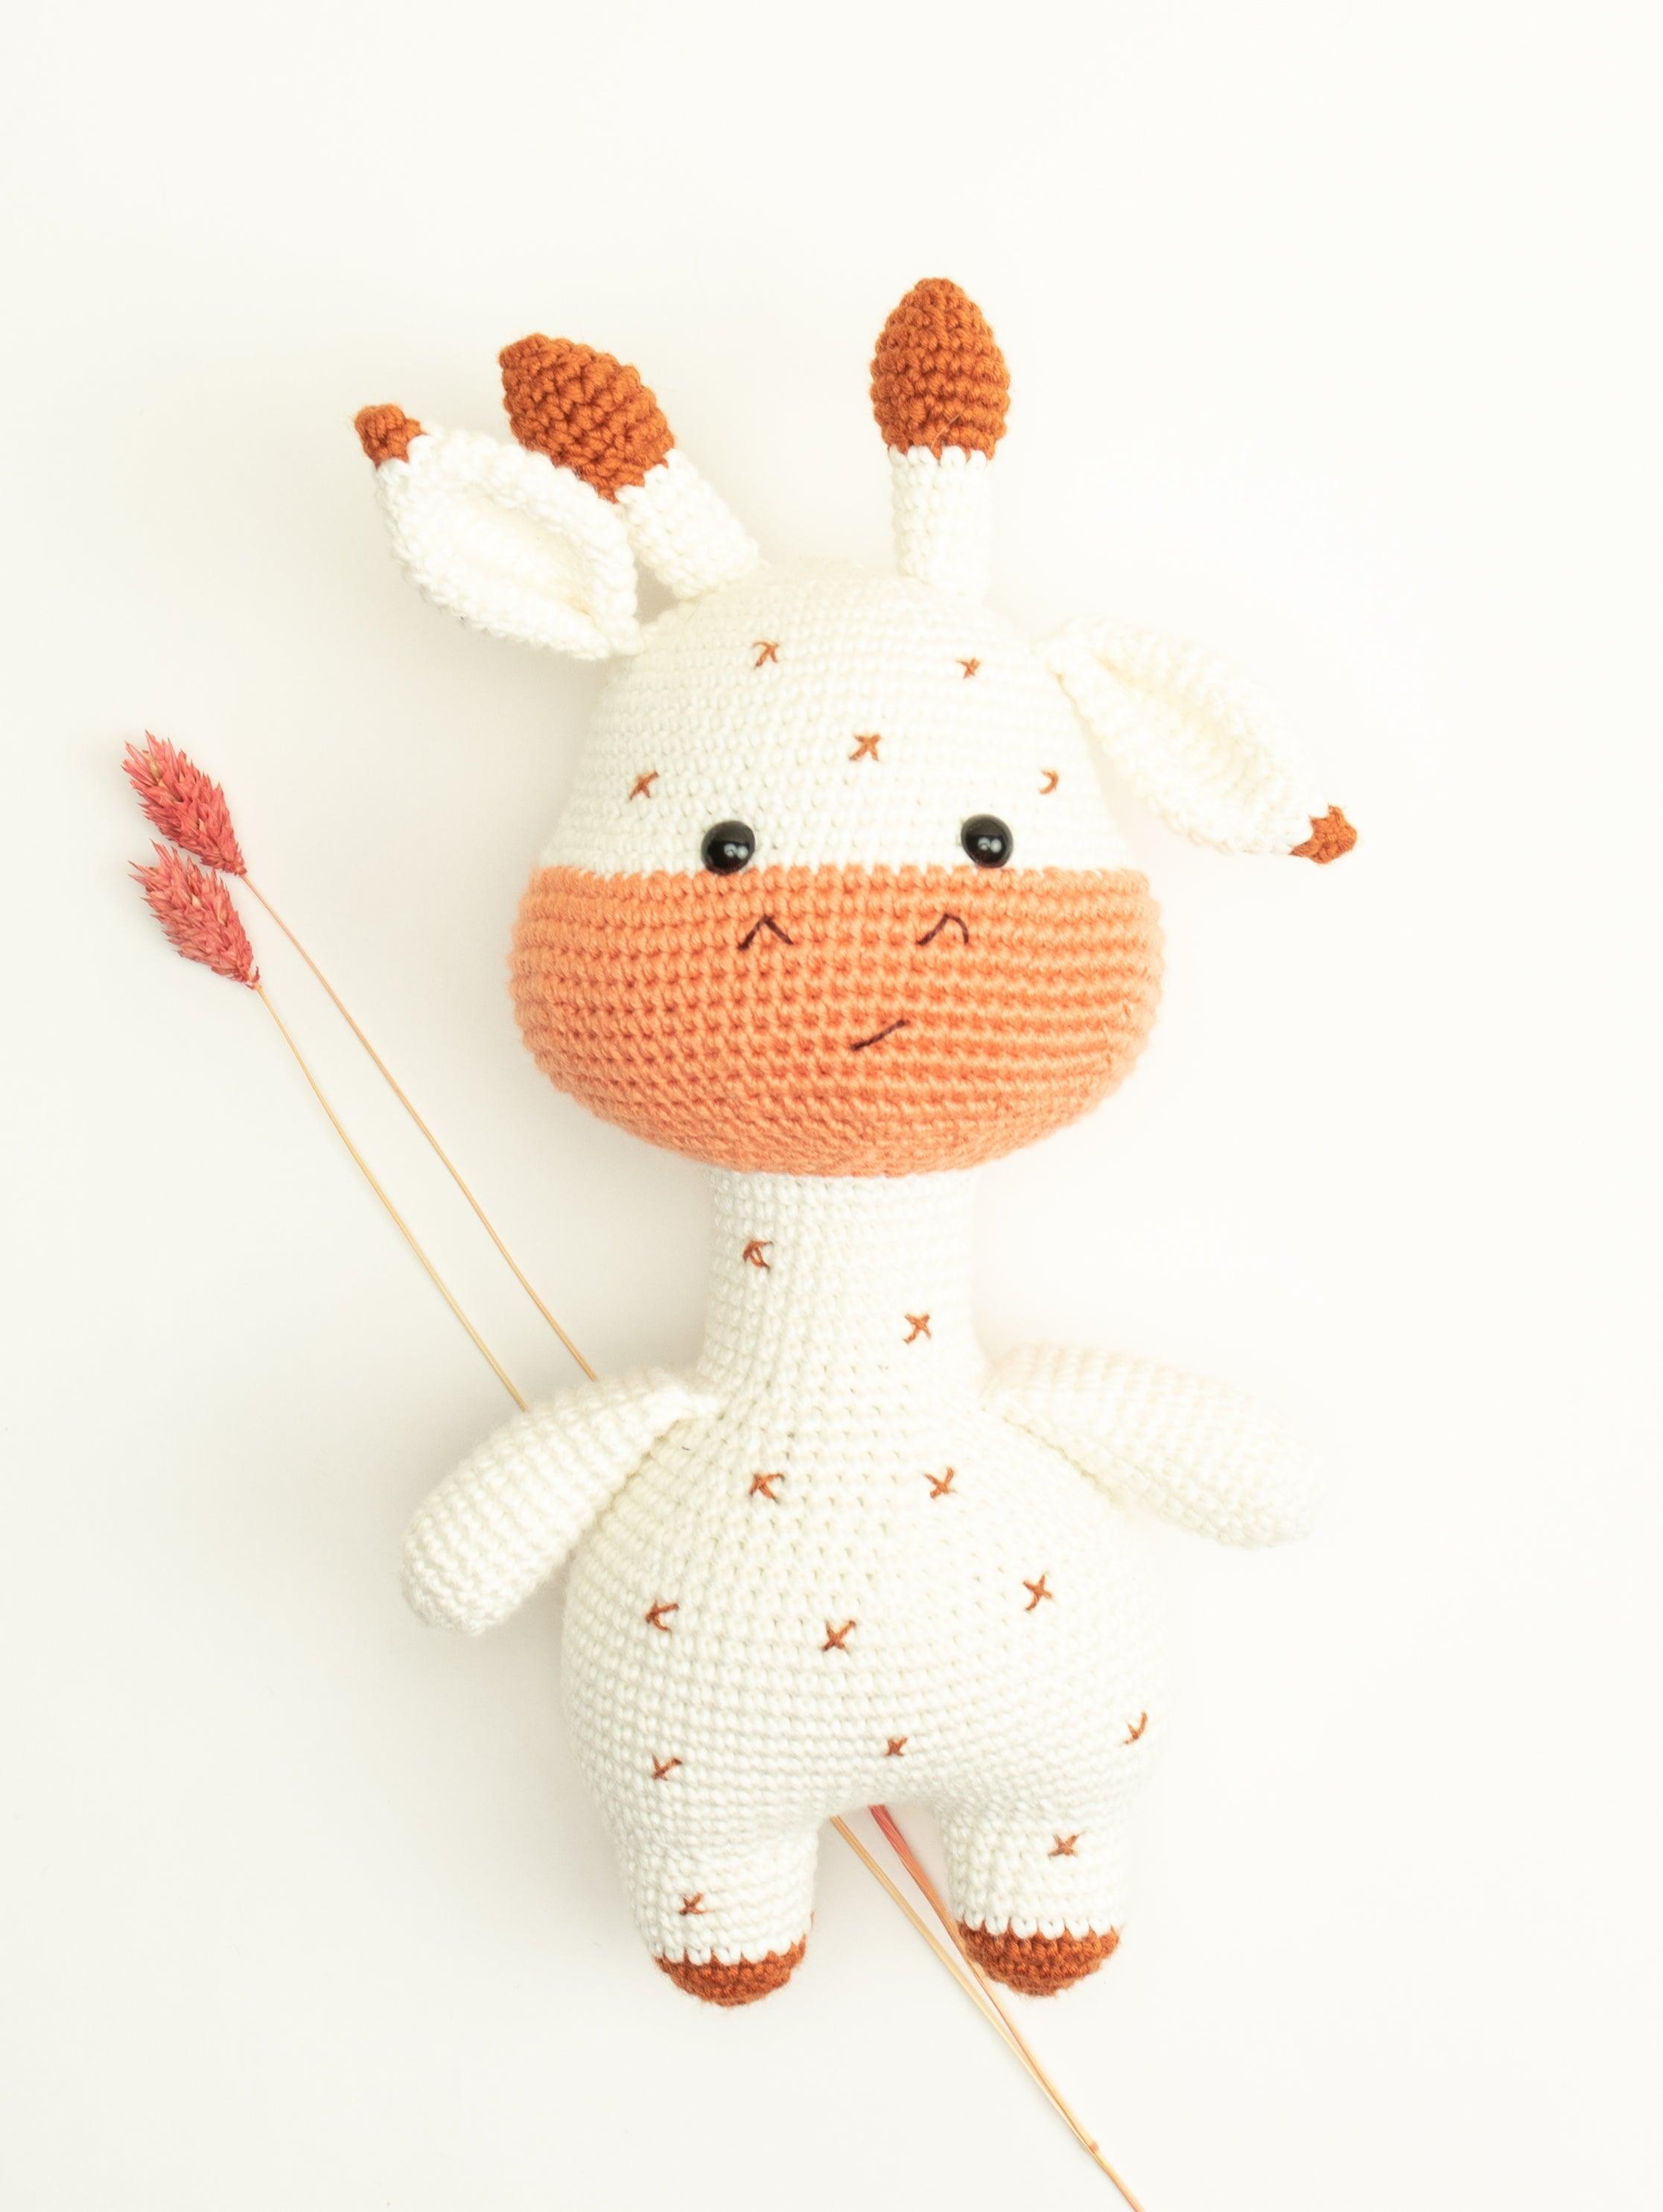 Crochet Doll - Gio the giraffe by Little Moy - Vysn